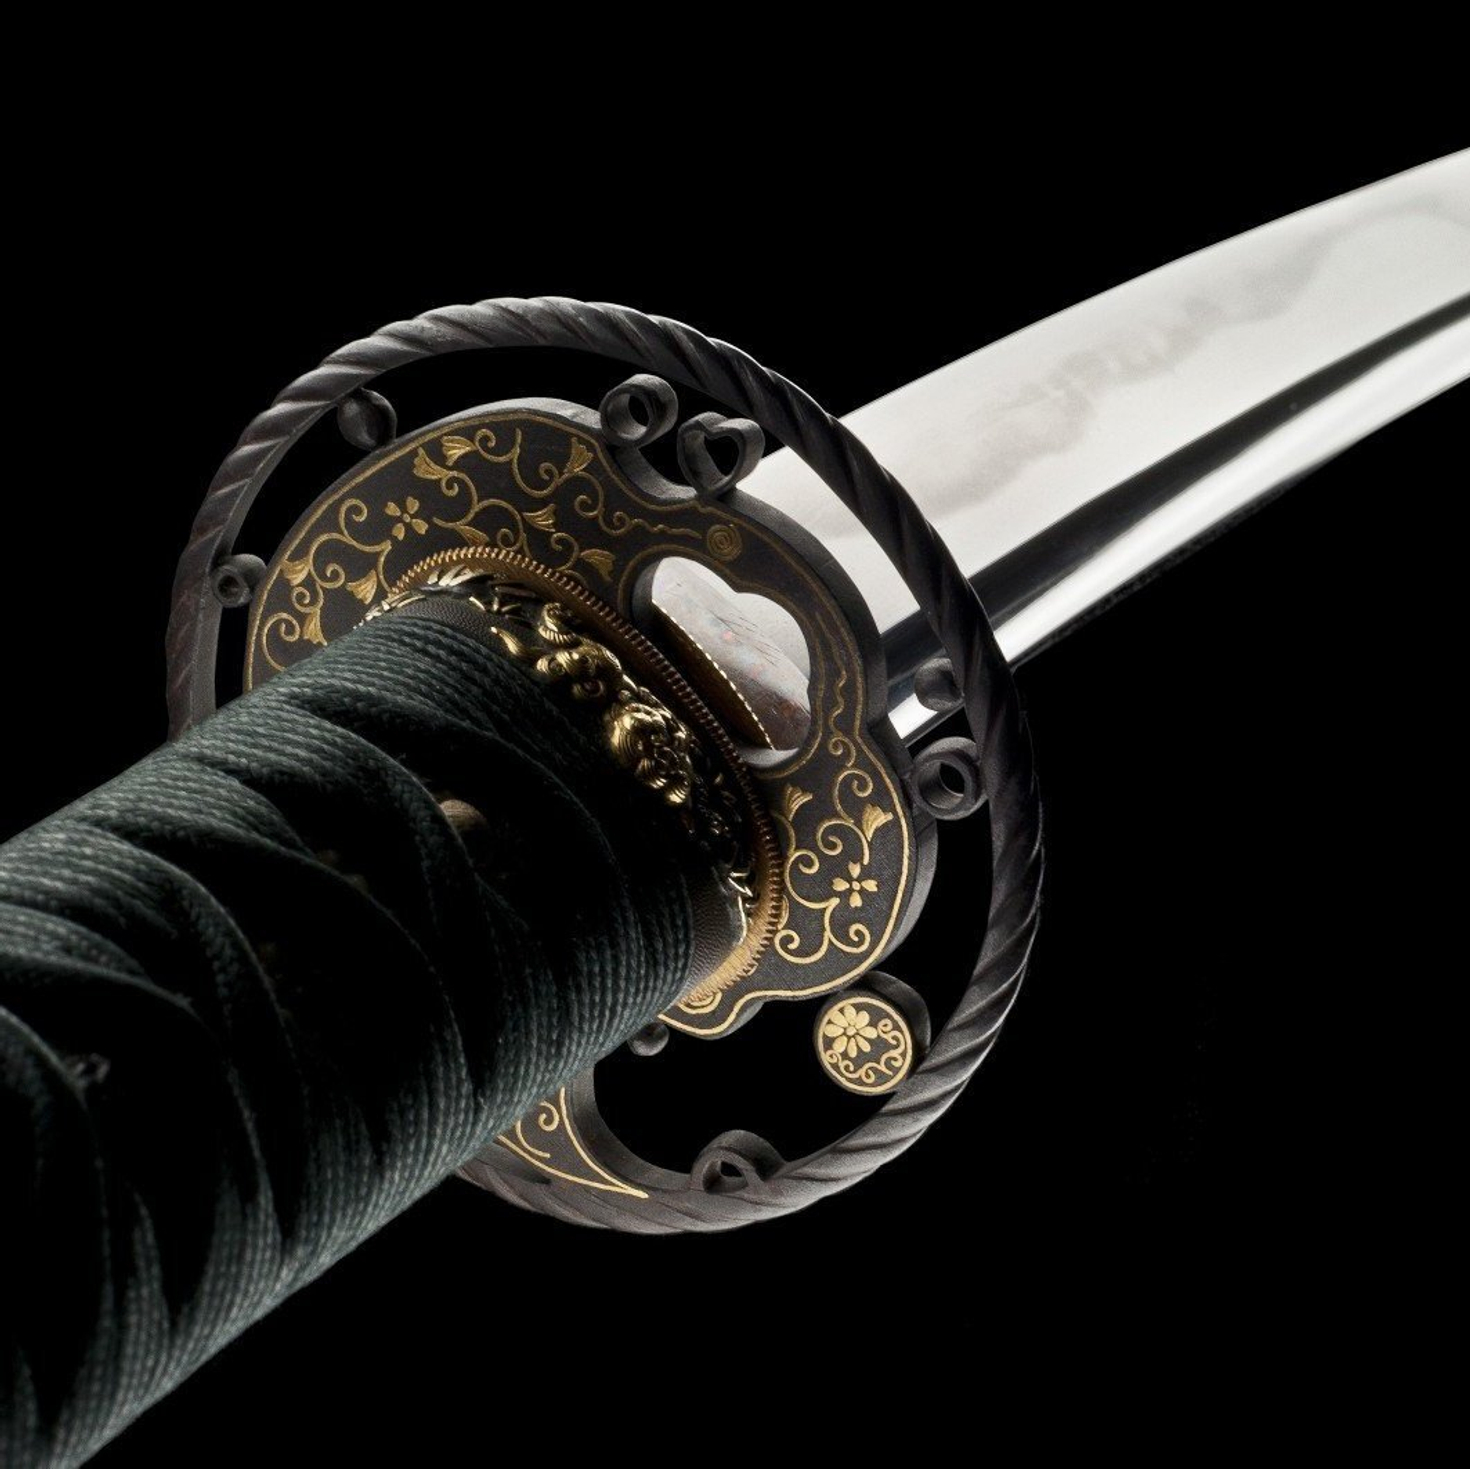 Самурайский меч 19973 (KATANA)